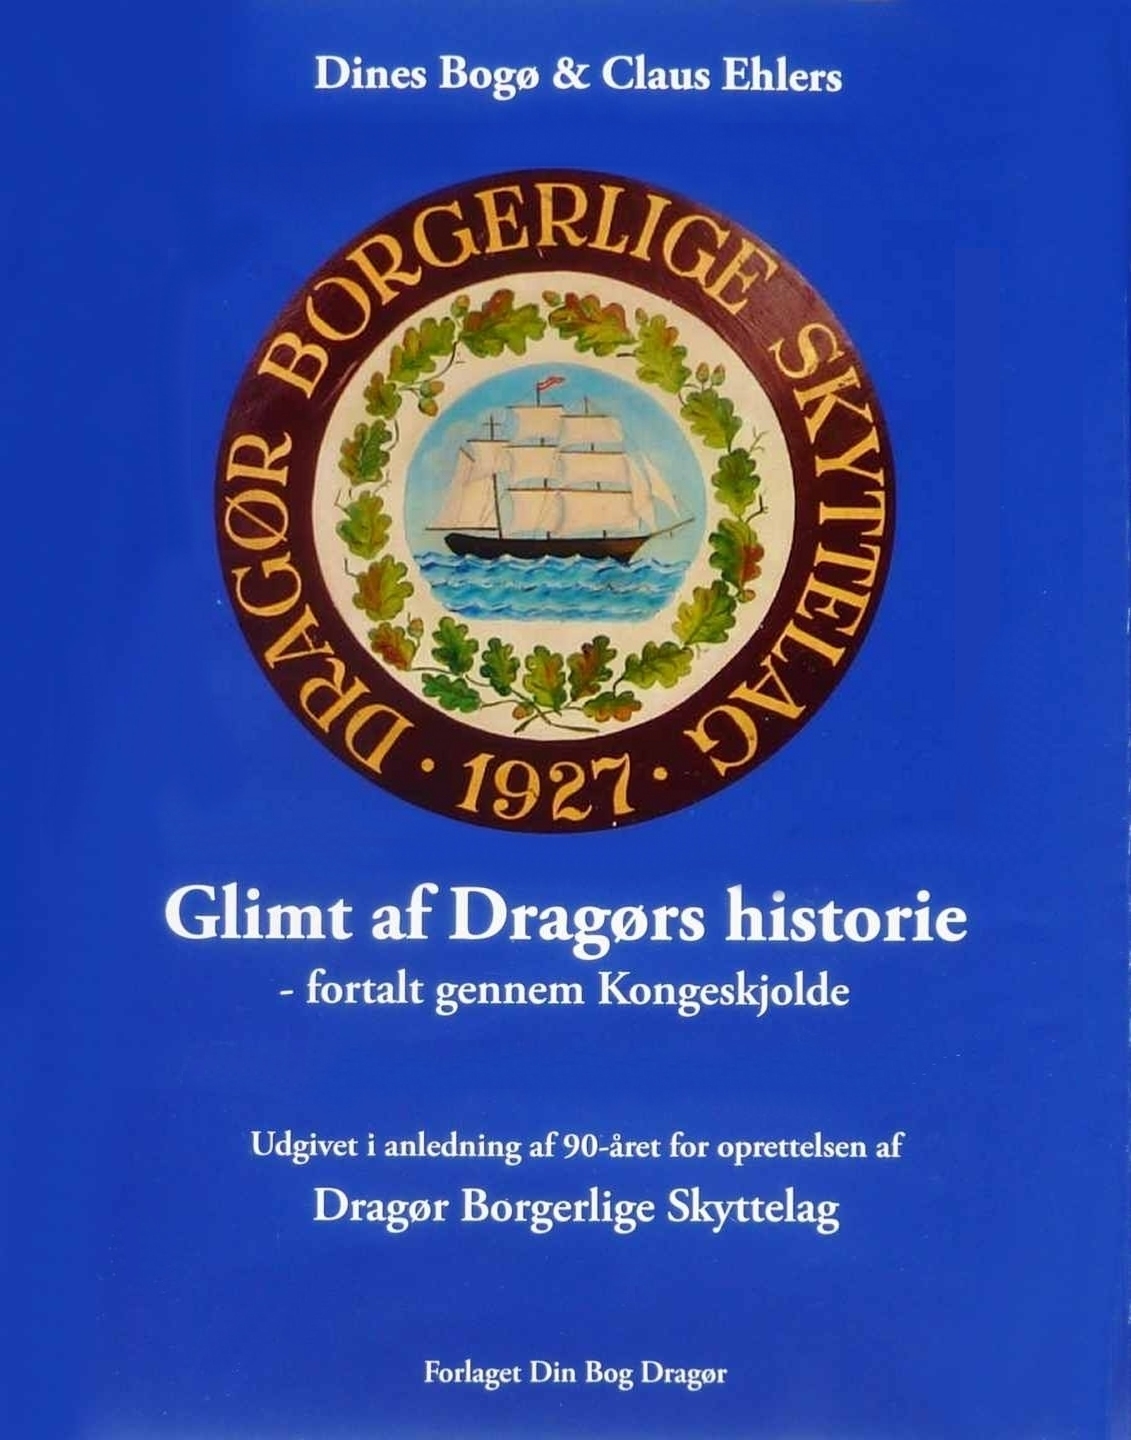 Dines Bogø - Lokalhistorisk Forening